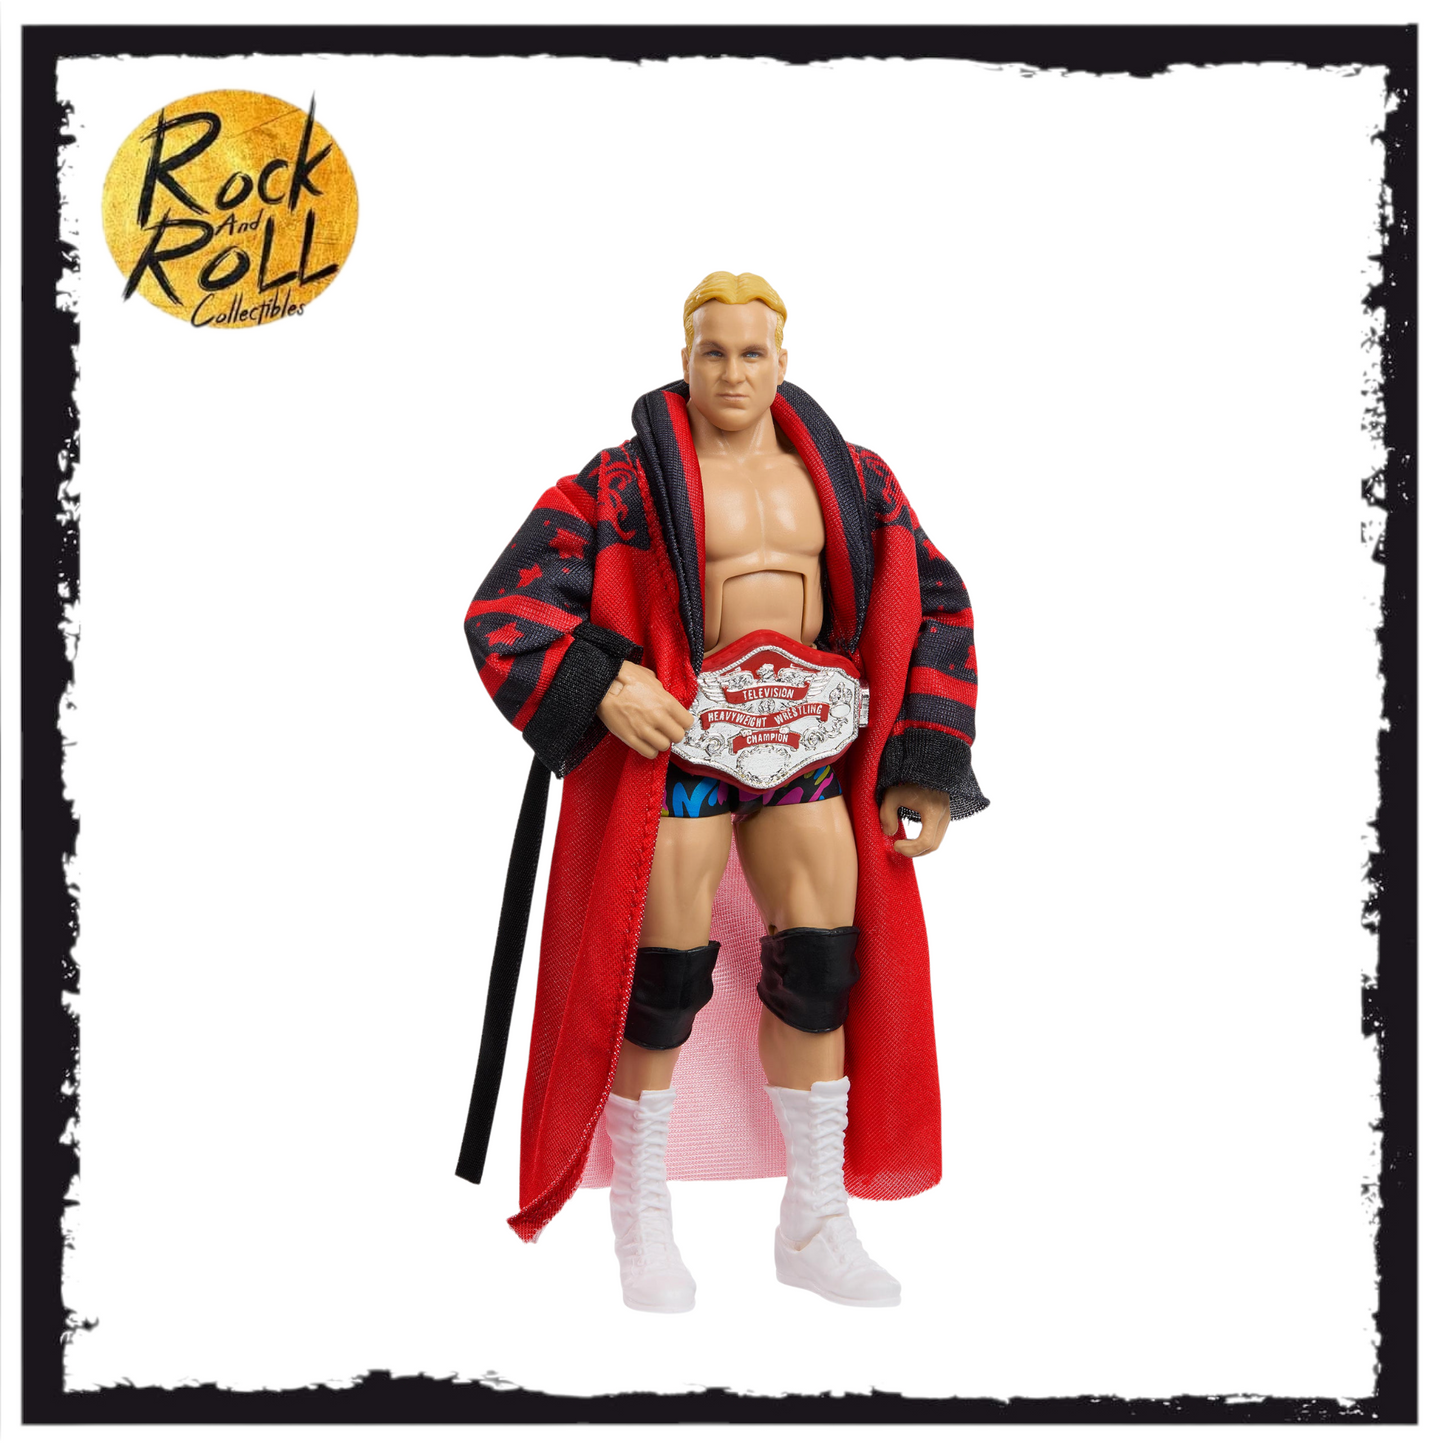 Loose WWE Elite 100 “Stunning” Steve Austin With Red Strap NWA TV Championship